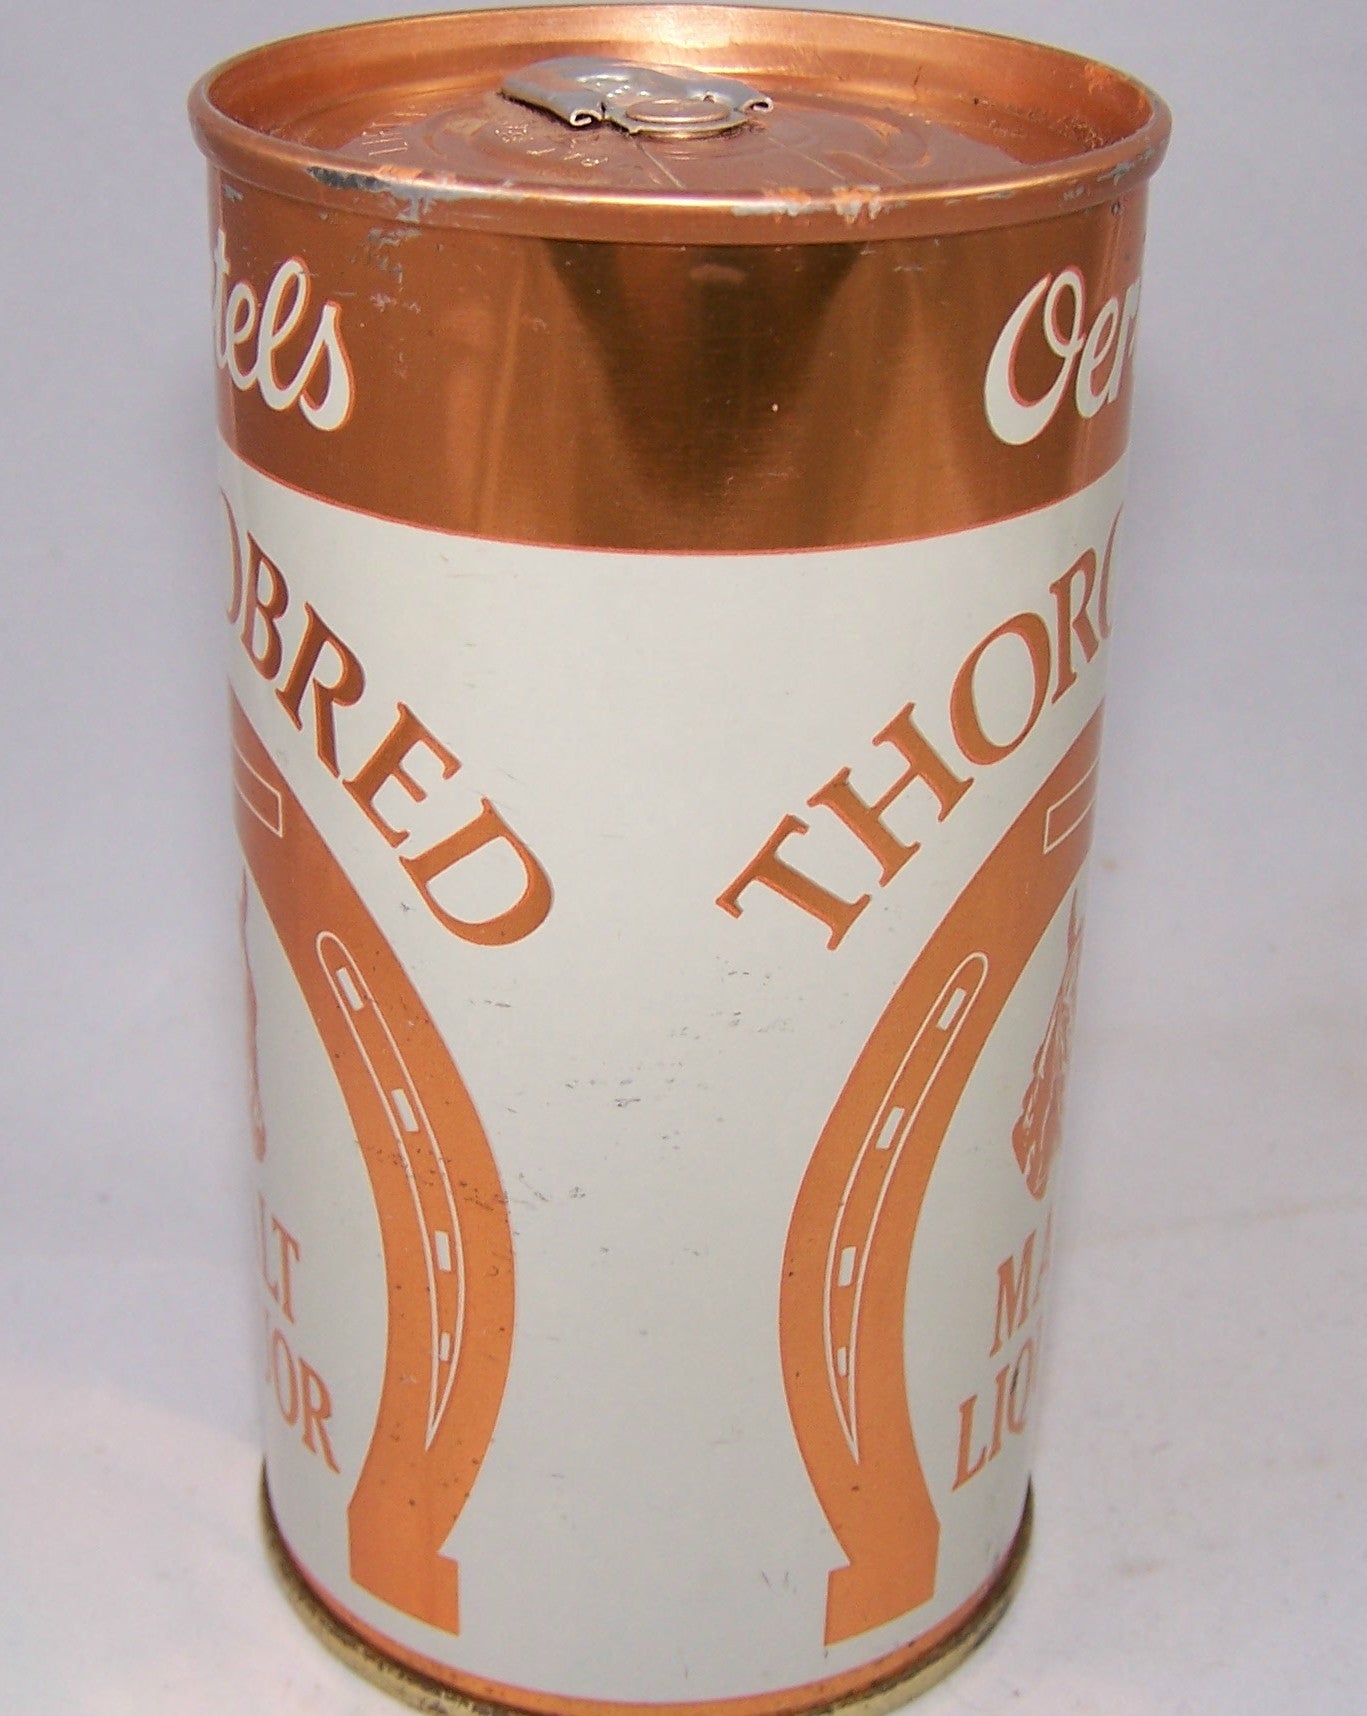 Oertels Thorobred Malt Liquor, USBC II 99-7, Grade 1/1 + sold on 10/10/15